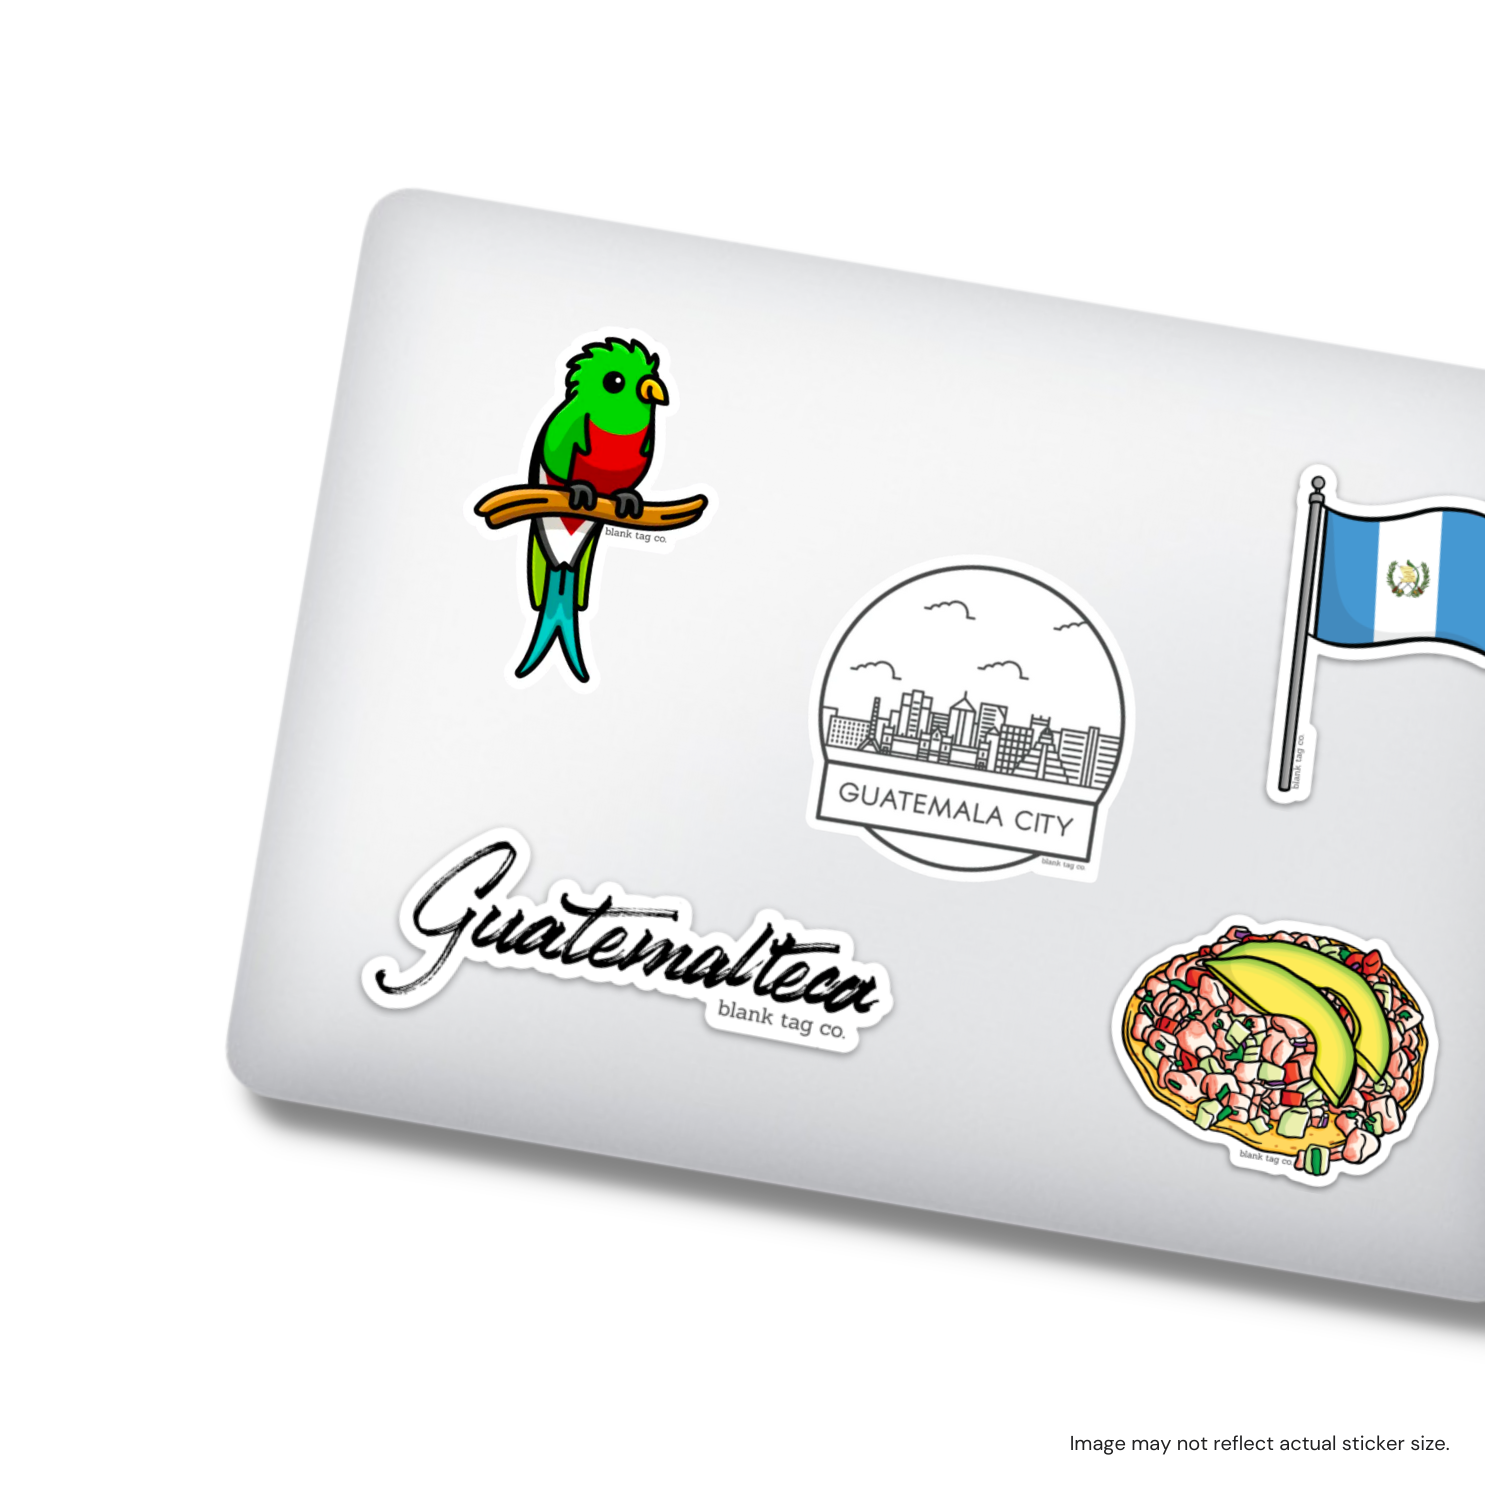 The Tostada de Ceviche Sticker